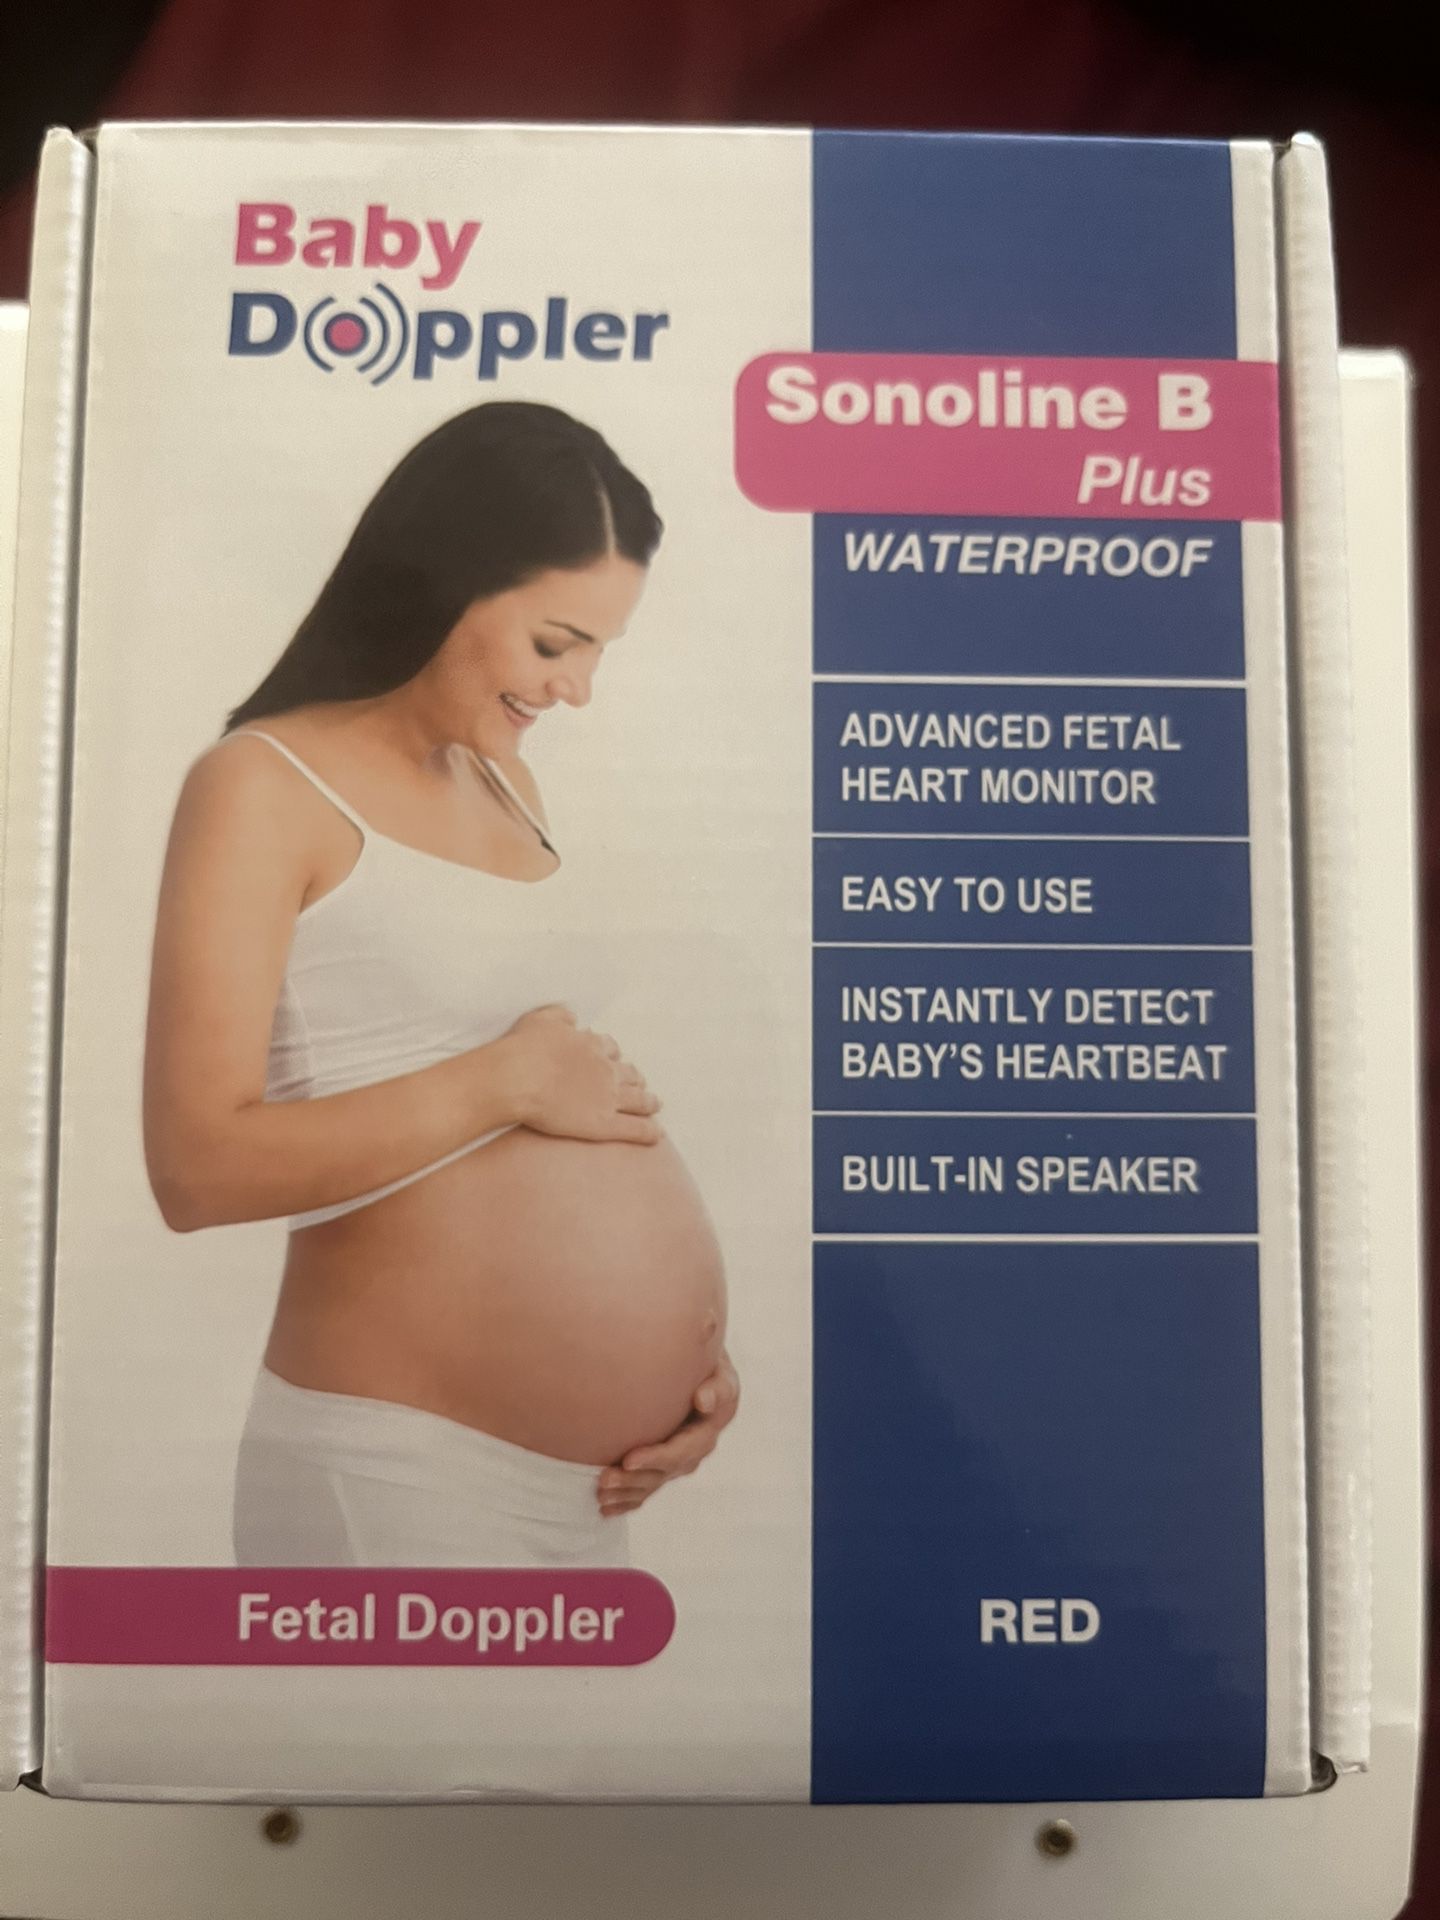 Sonoline B Water Resistant Fetal Doppler